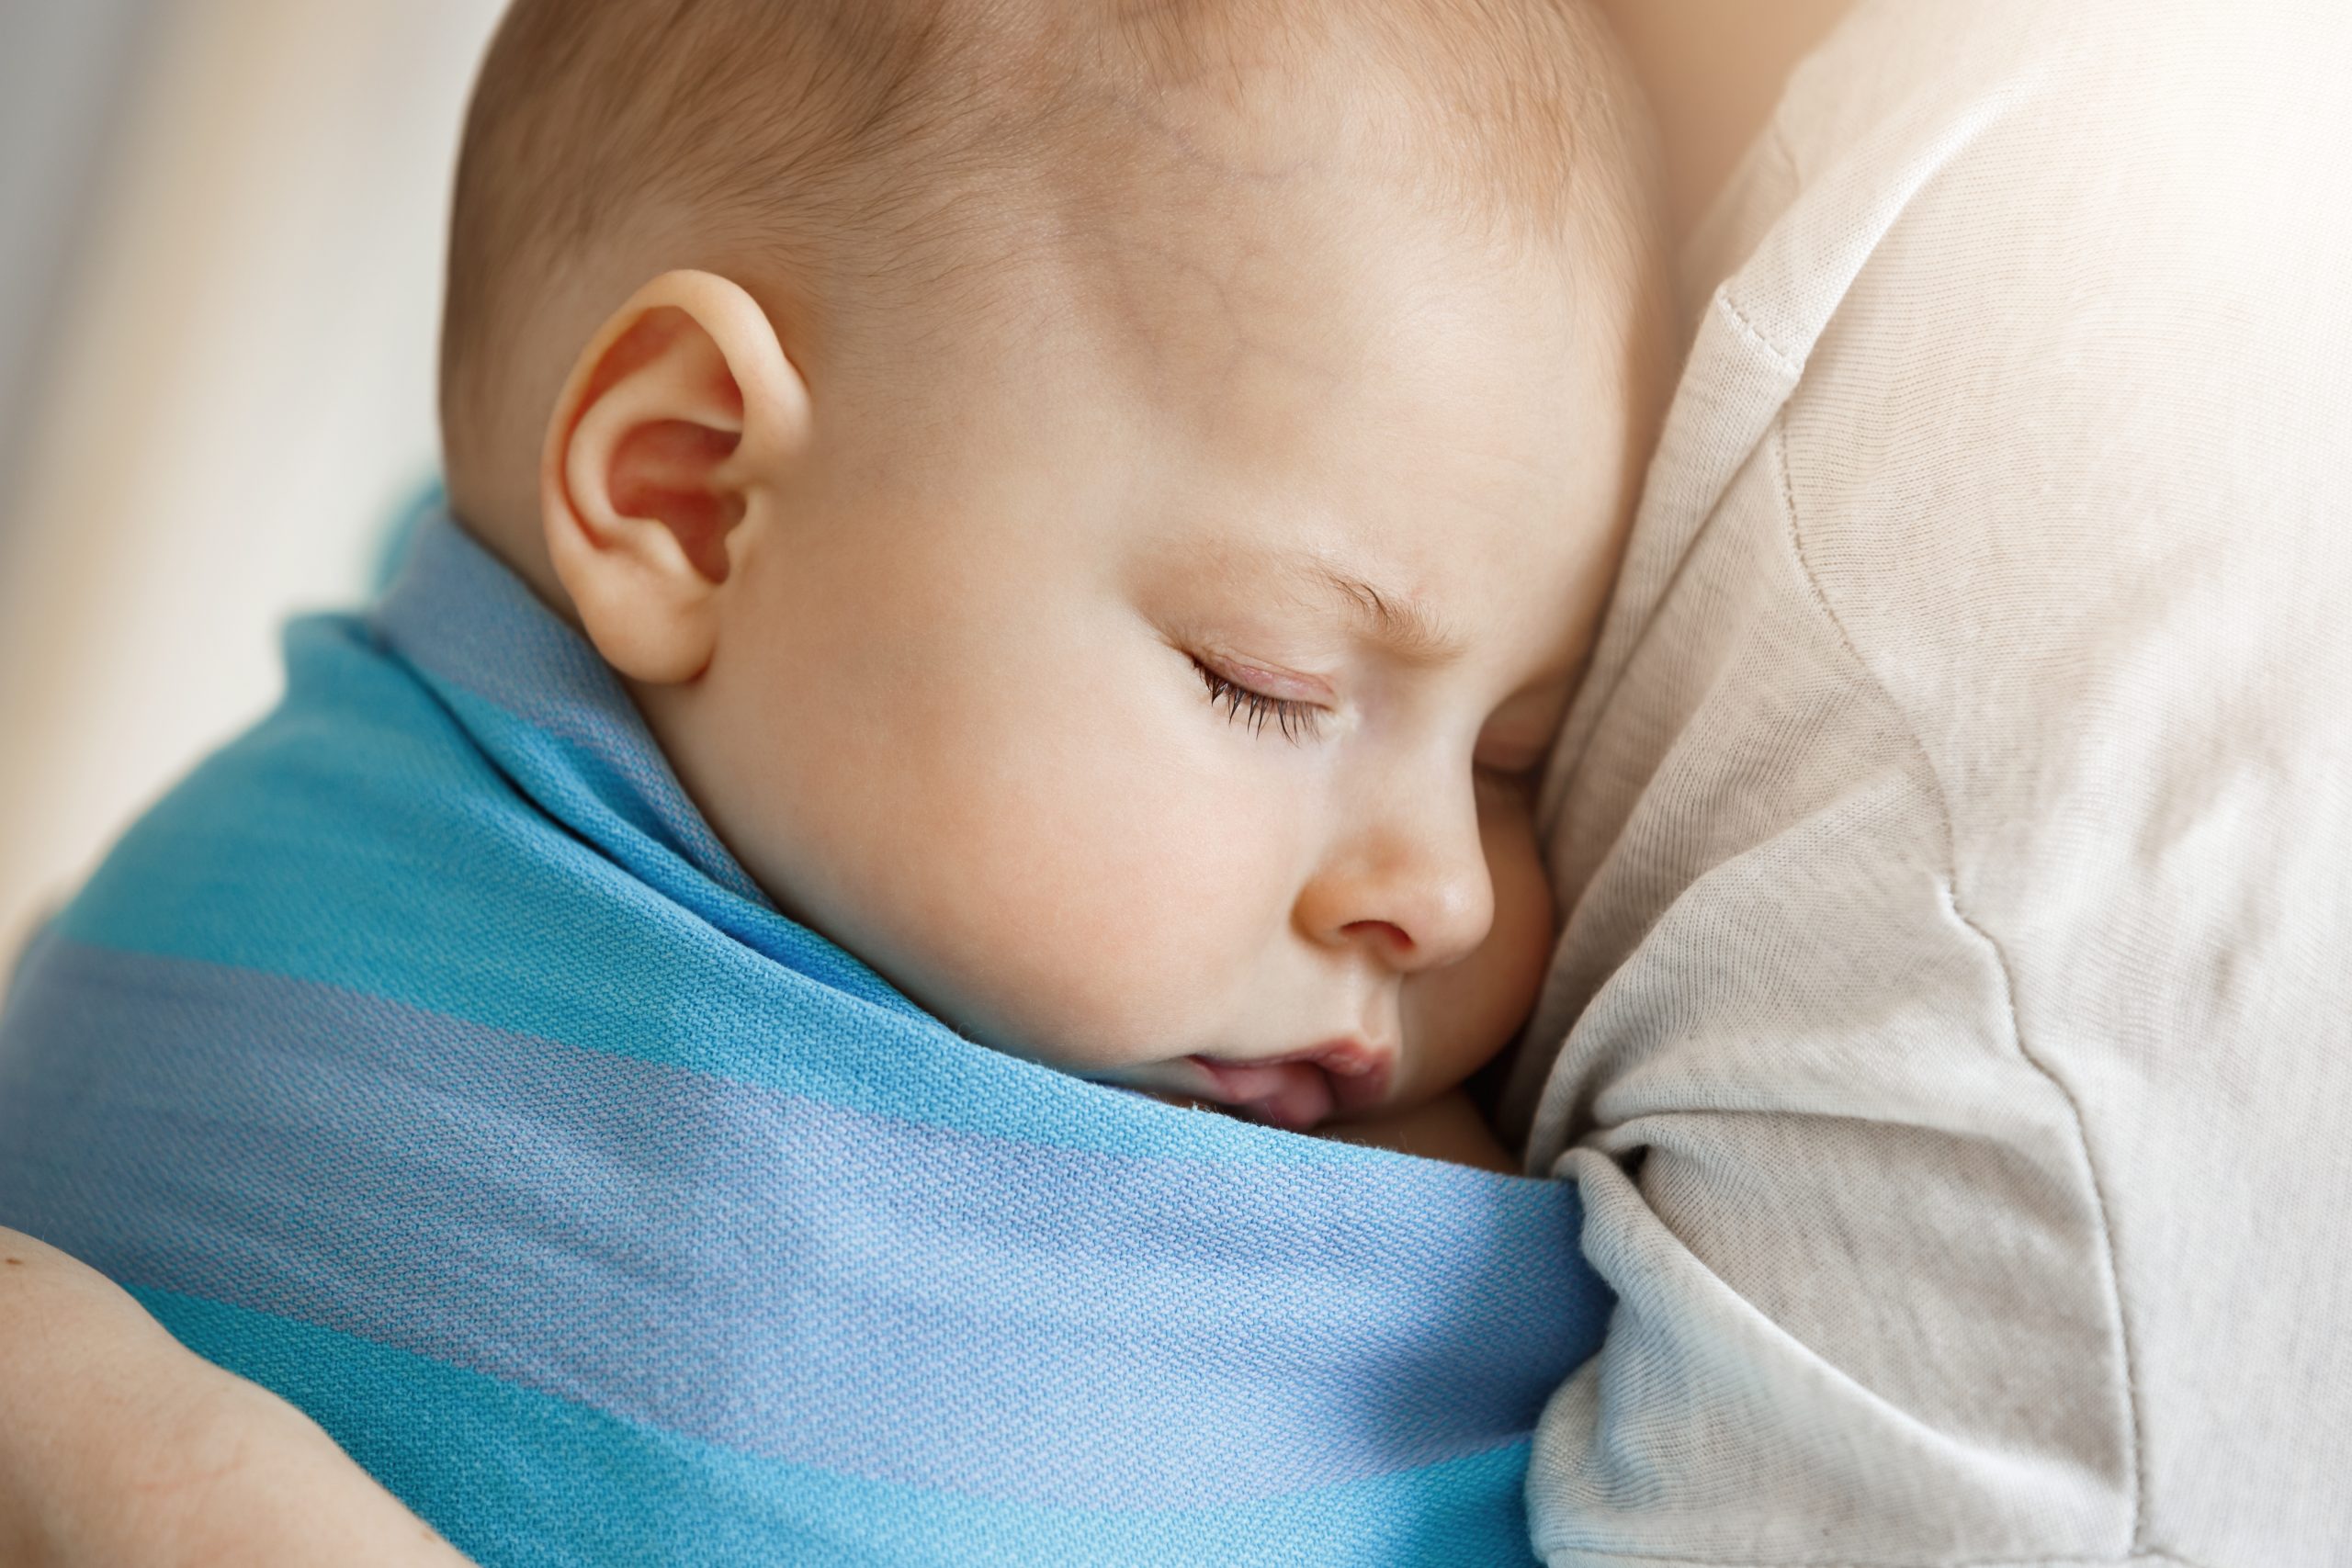 Janela de sono do bebê: o que é, como identificar e respeitar!